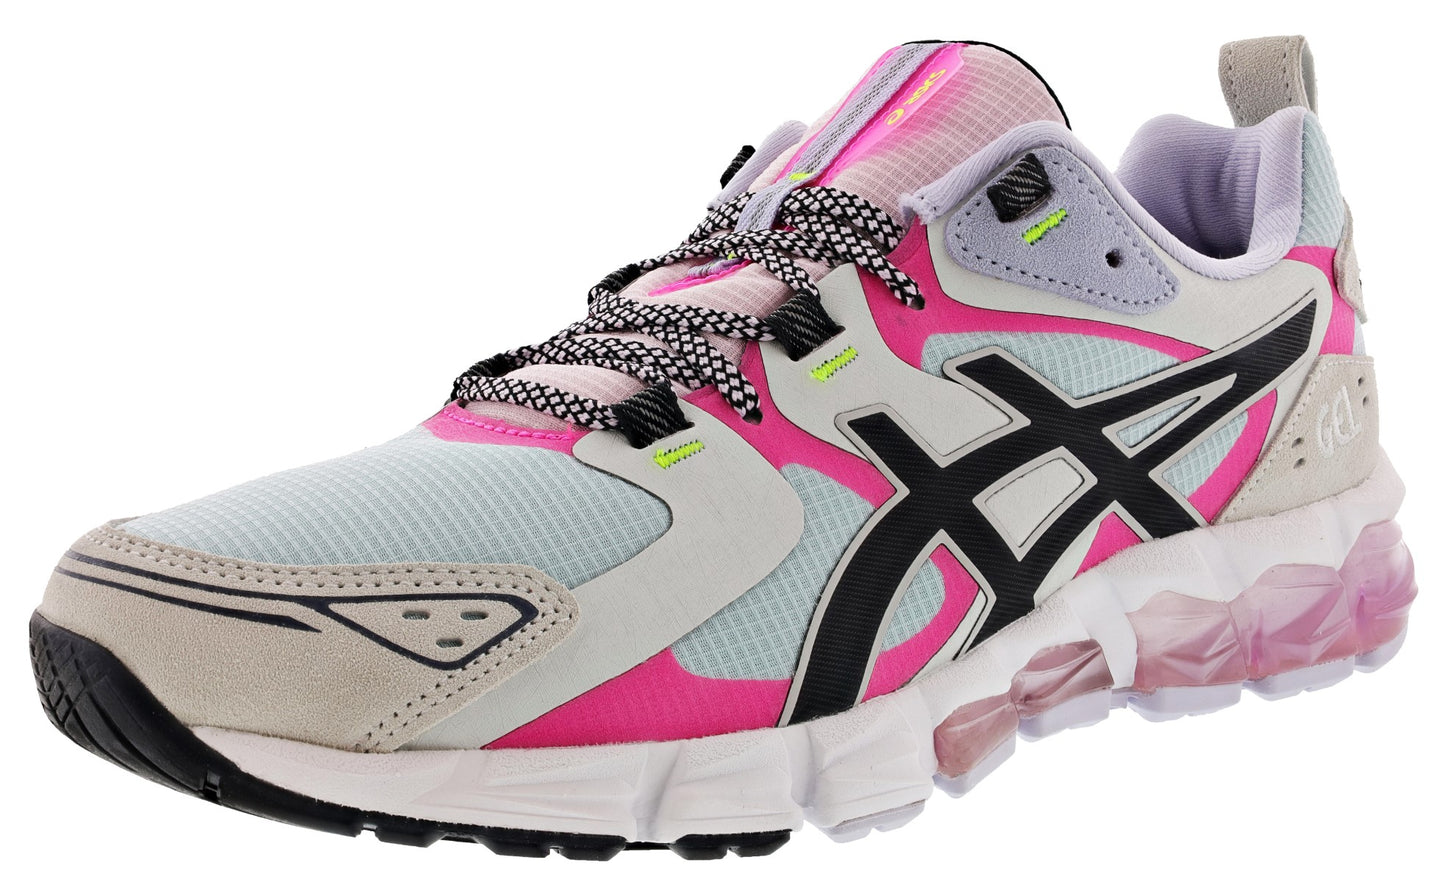 Lateral of Aqua Angel/Hot Pink Asics Gel Quantum 180 Women's Running Shoes for Overpronation